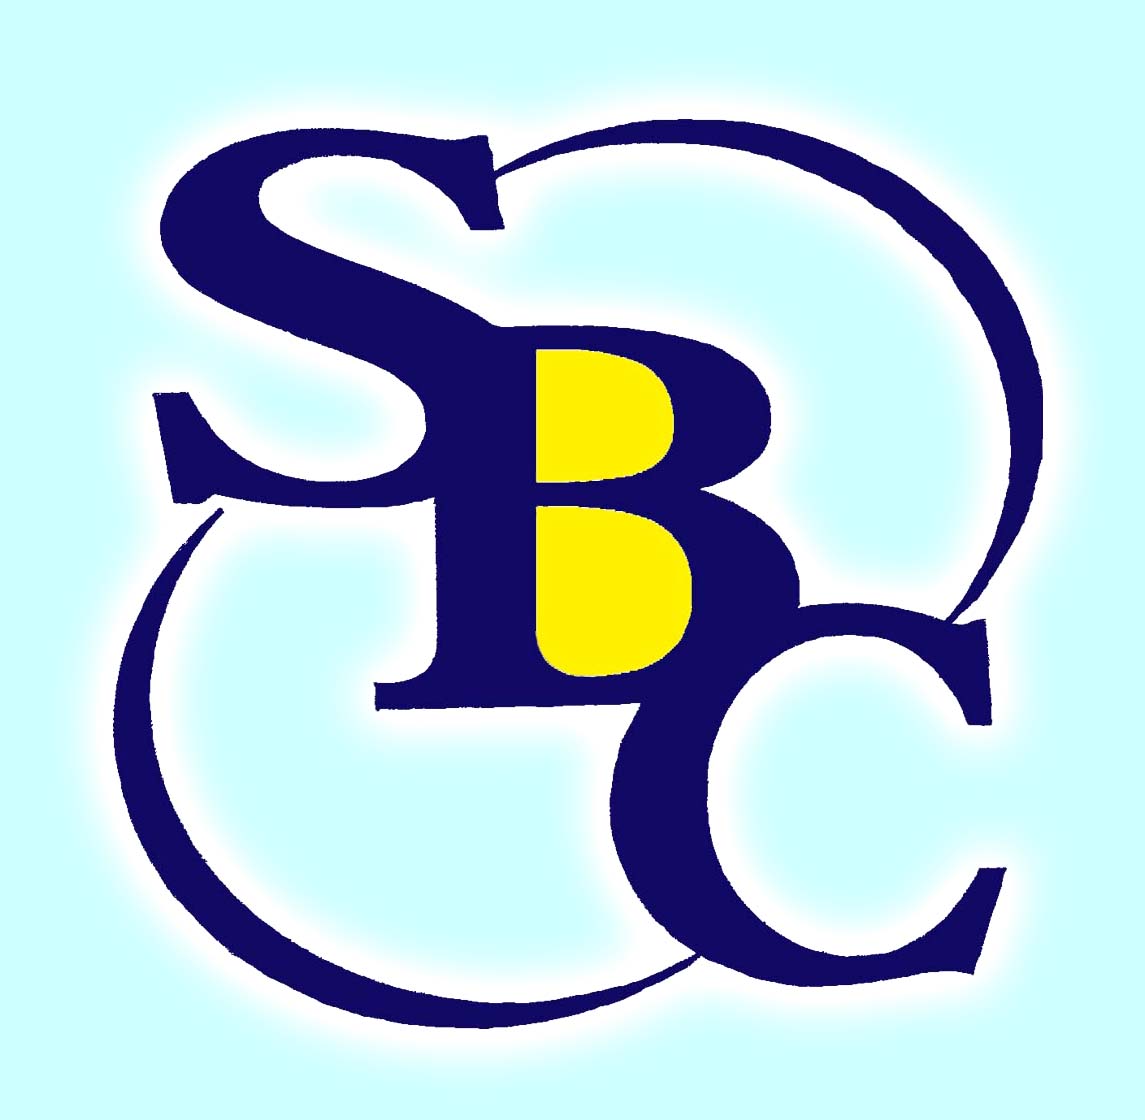 Sbc Logo - ClipArt Best